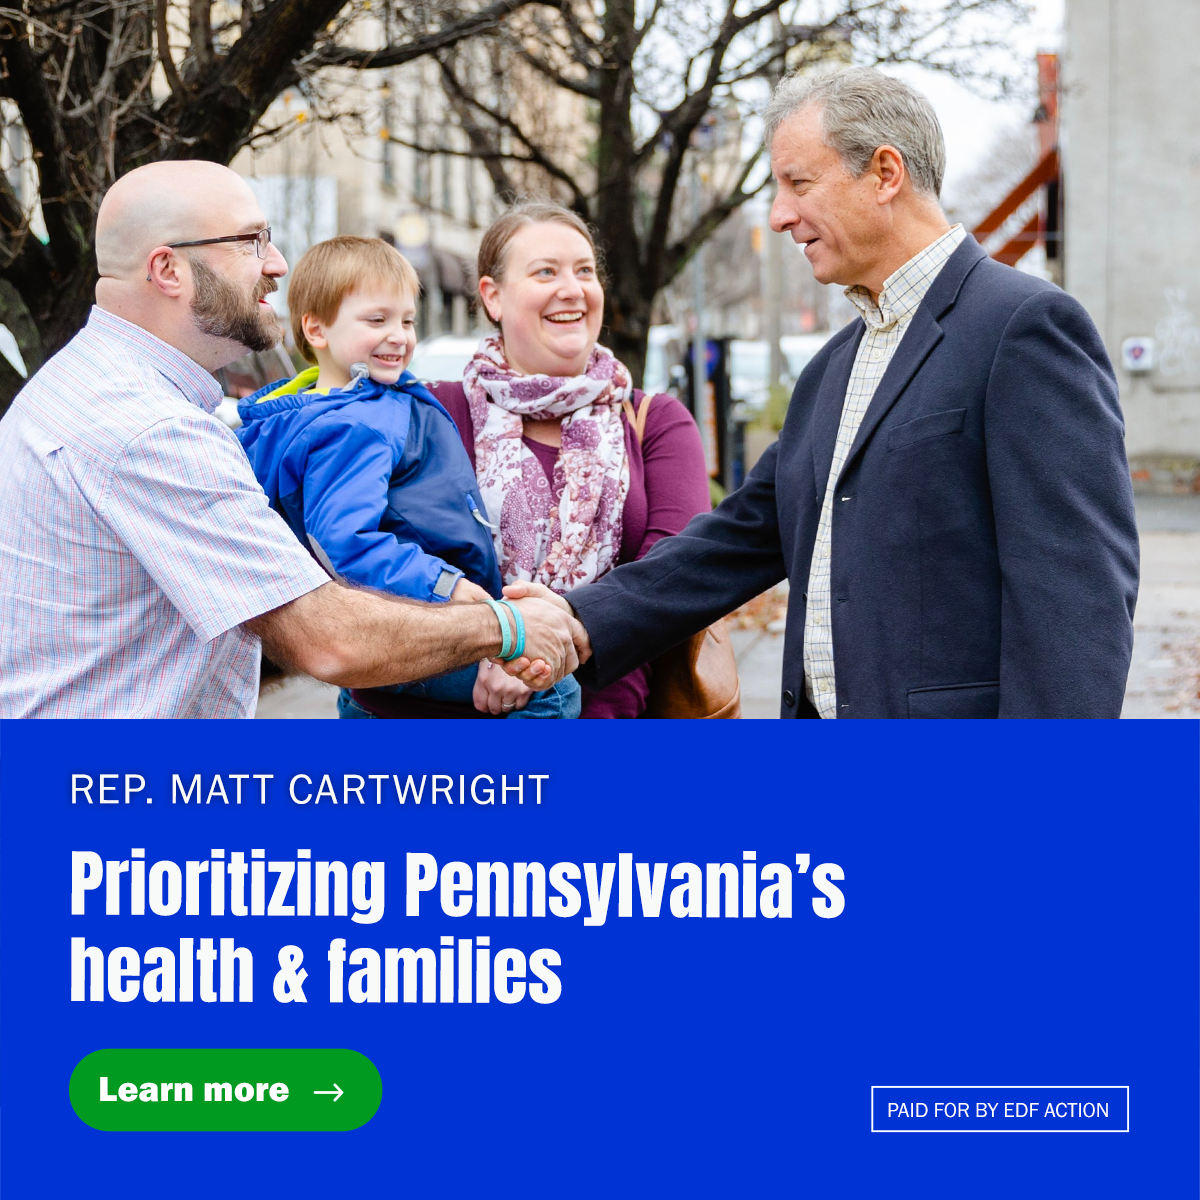 Rep. Cartwright Prioritizing Pennsylvania's Health & Families